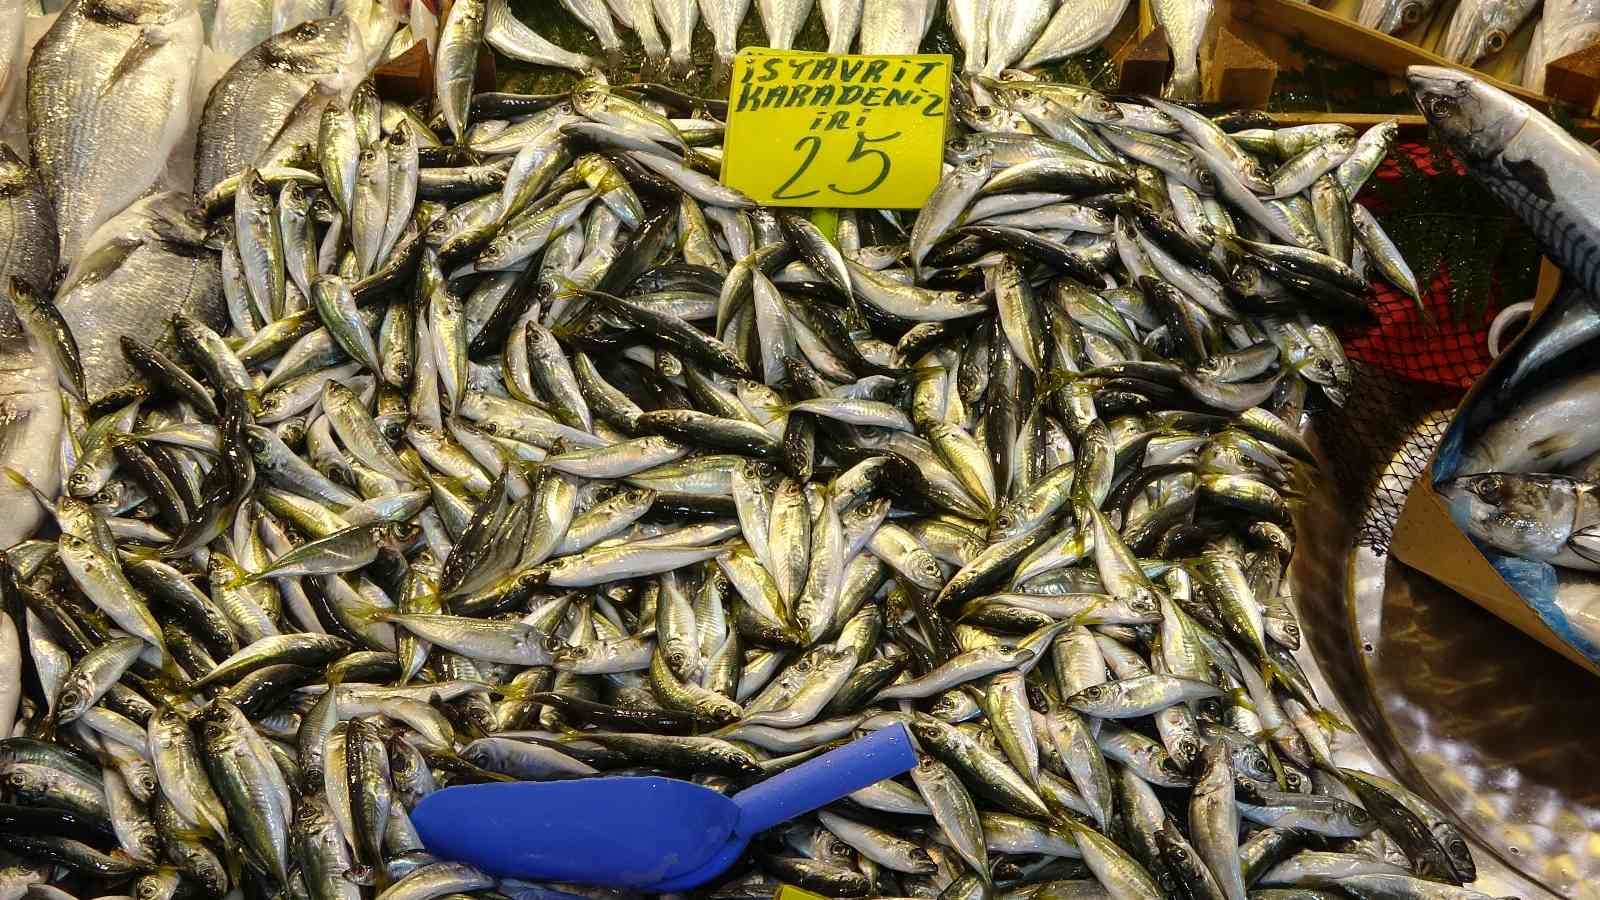 Mevsimin en lezzetli balığı istavrit oldu #kocaeli